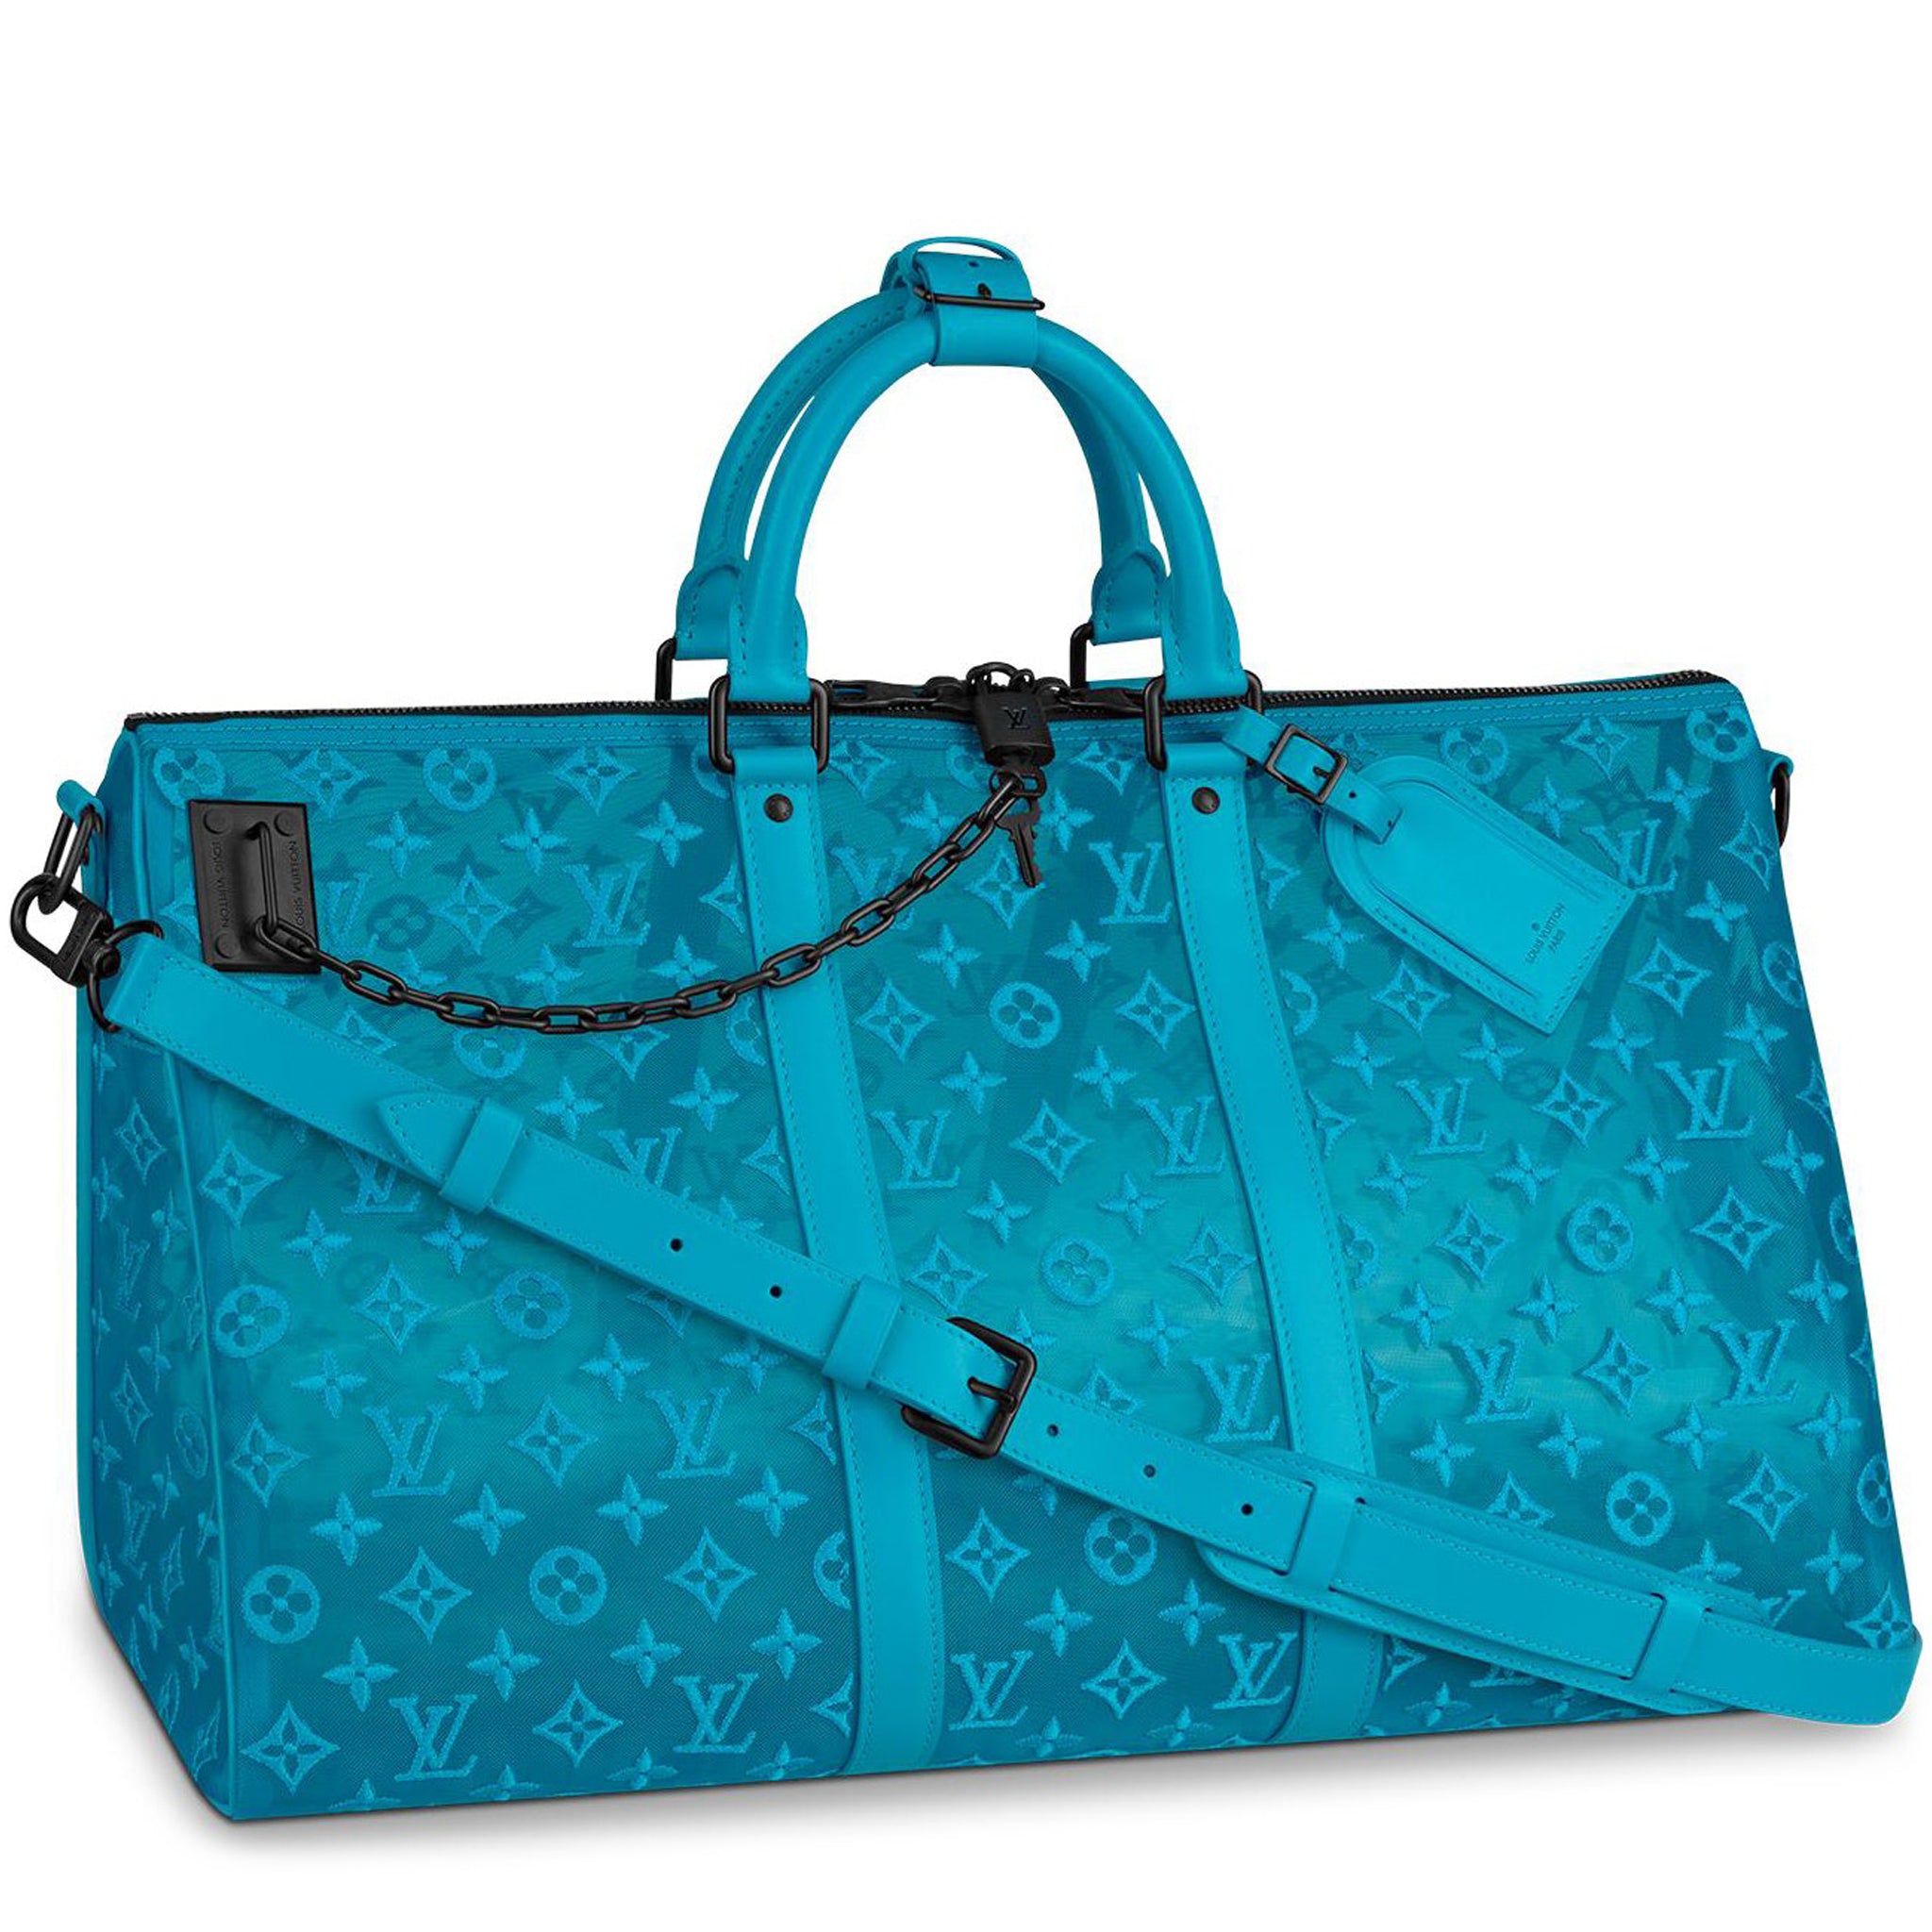 Cheap Hotelomega Jordan outlet, Louis Vuitton LV Monogram Zip Through Blue  Hoodie